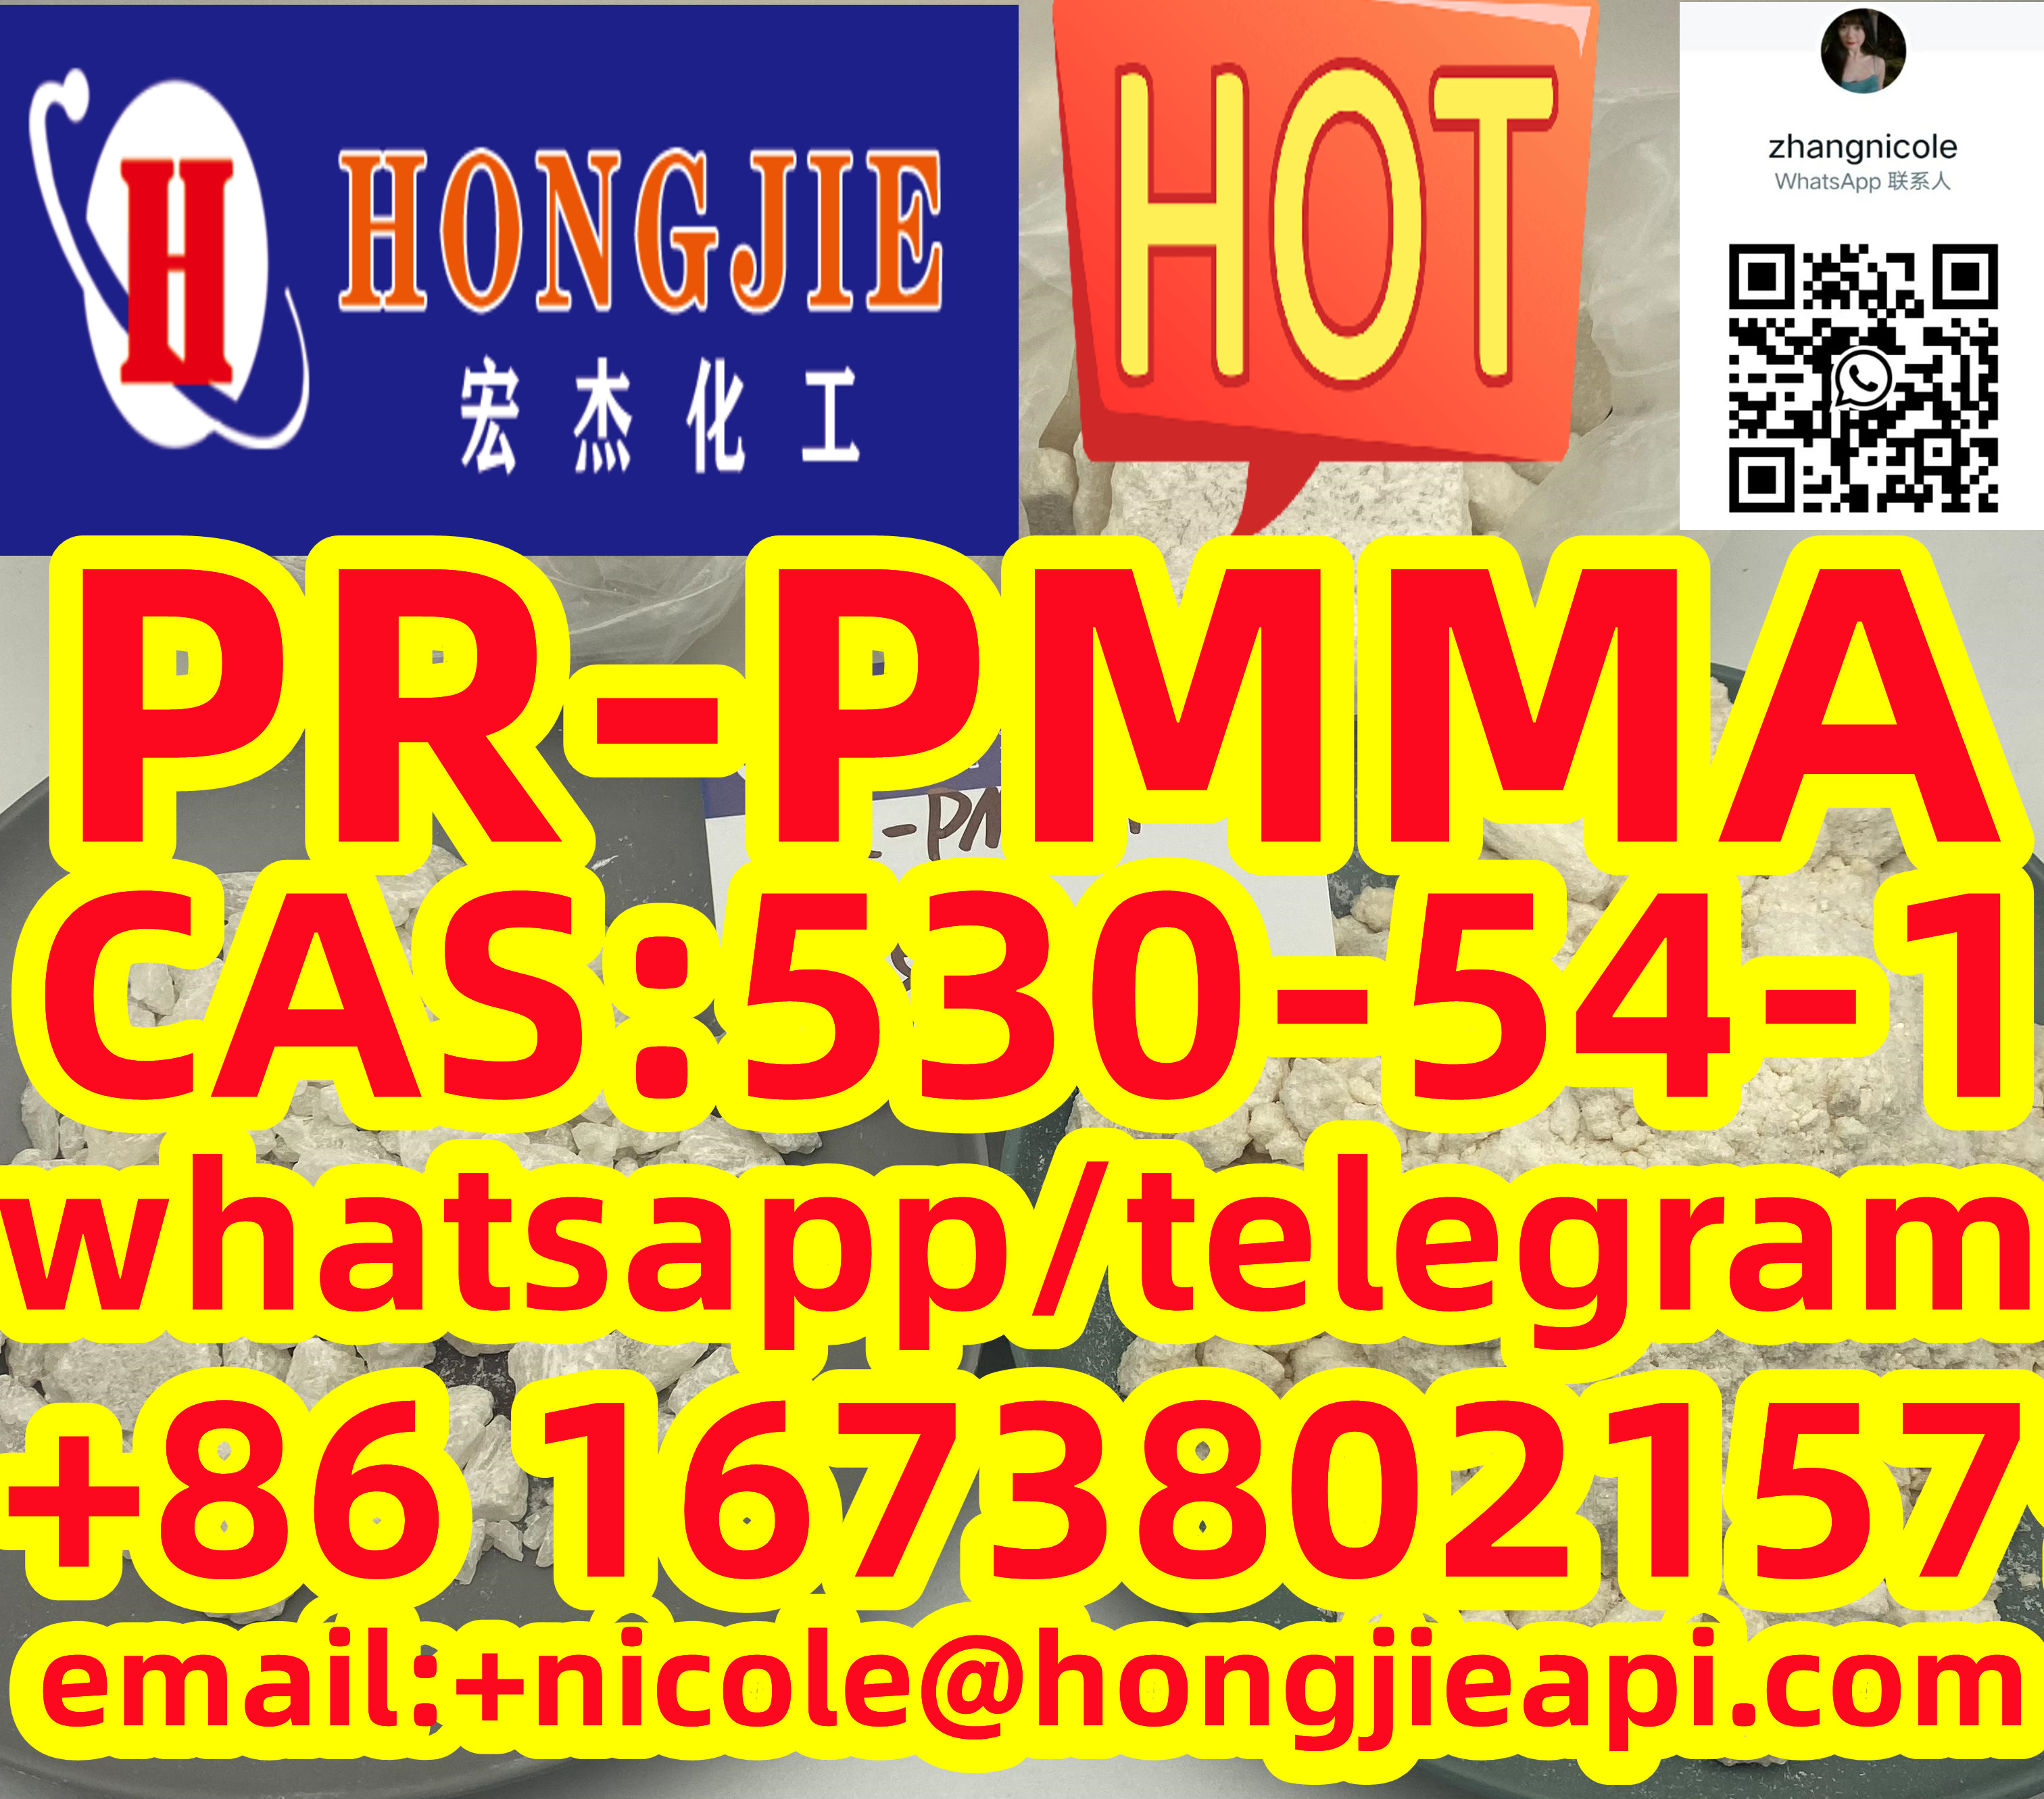 Low price 2-PR-PMMA CAS:530-54-1